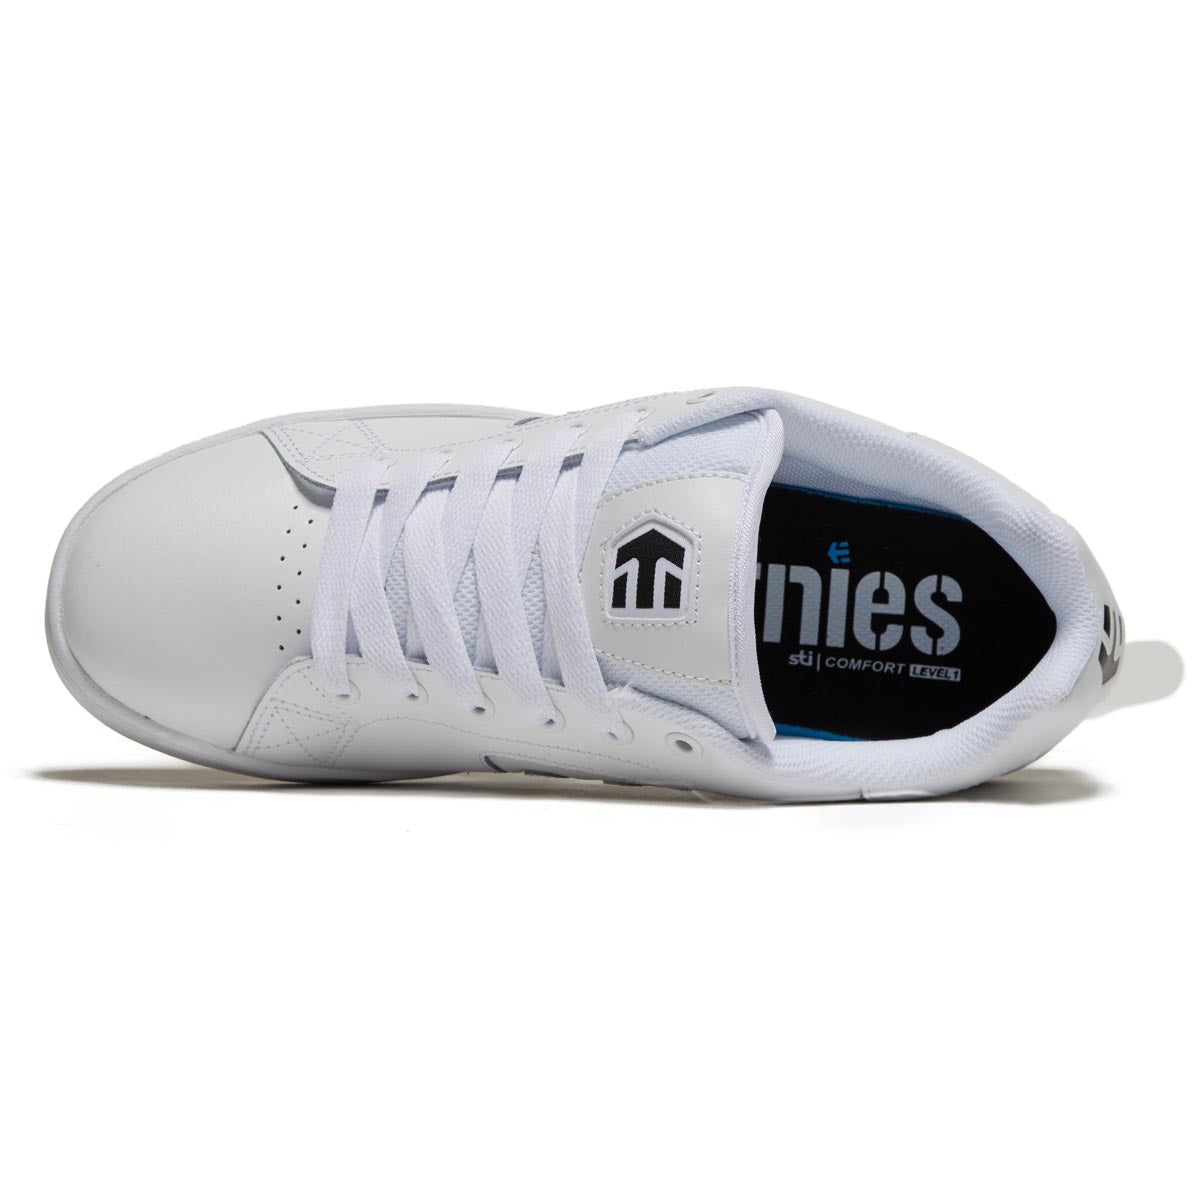 Etnies Callicut Shoes - White/Black image 3